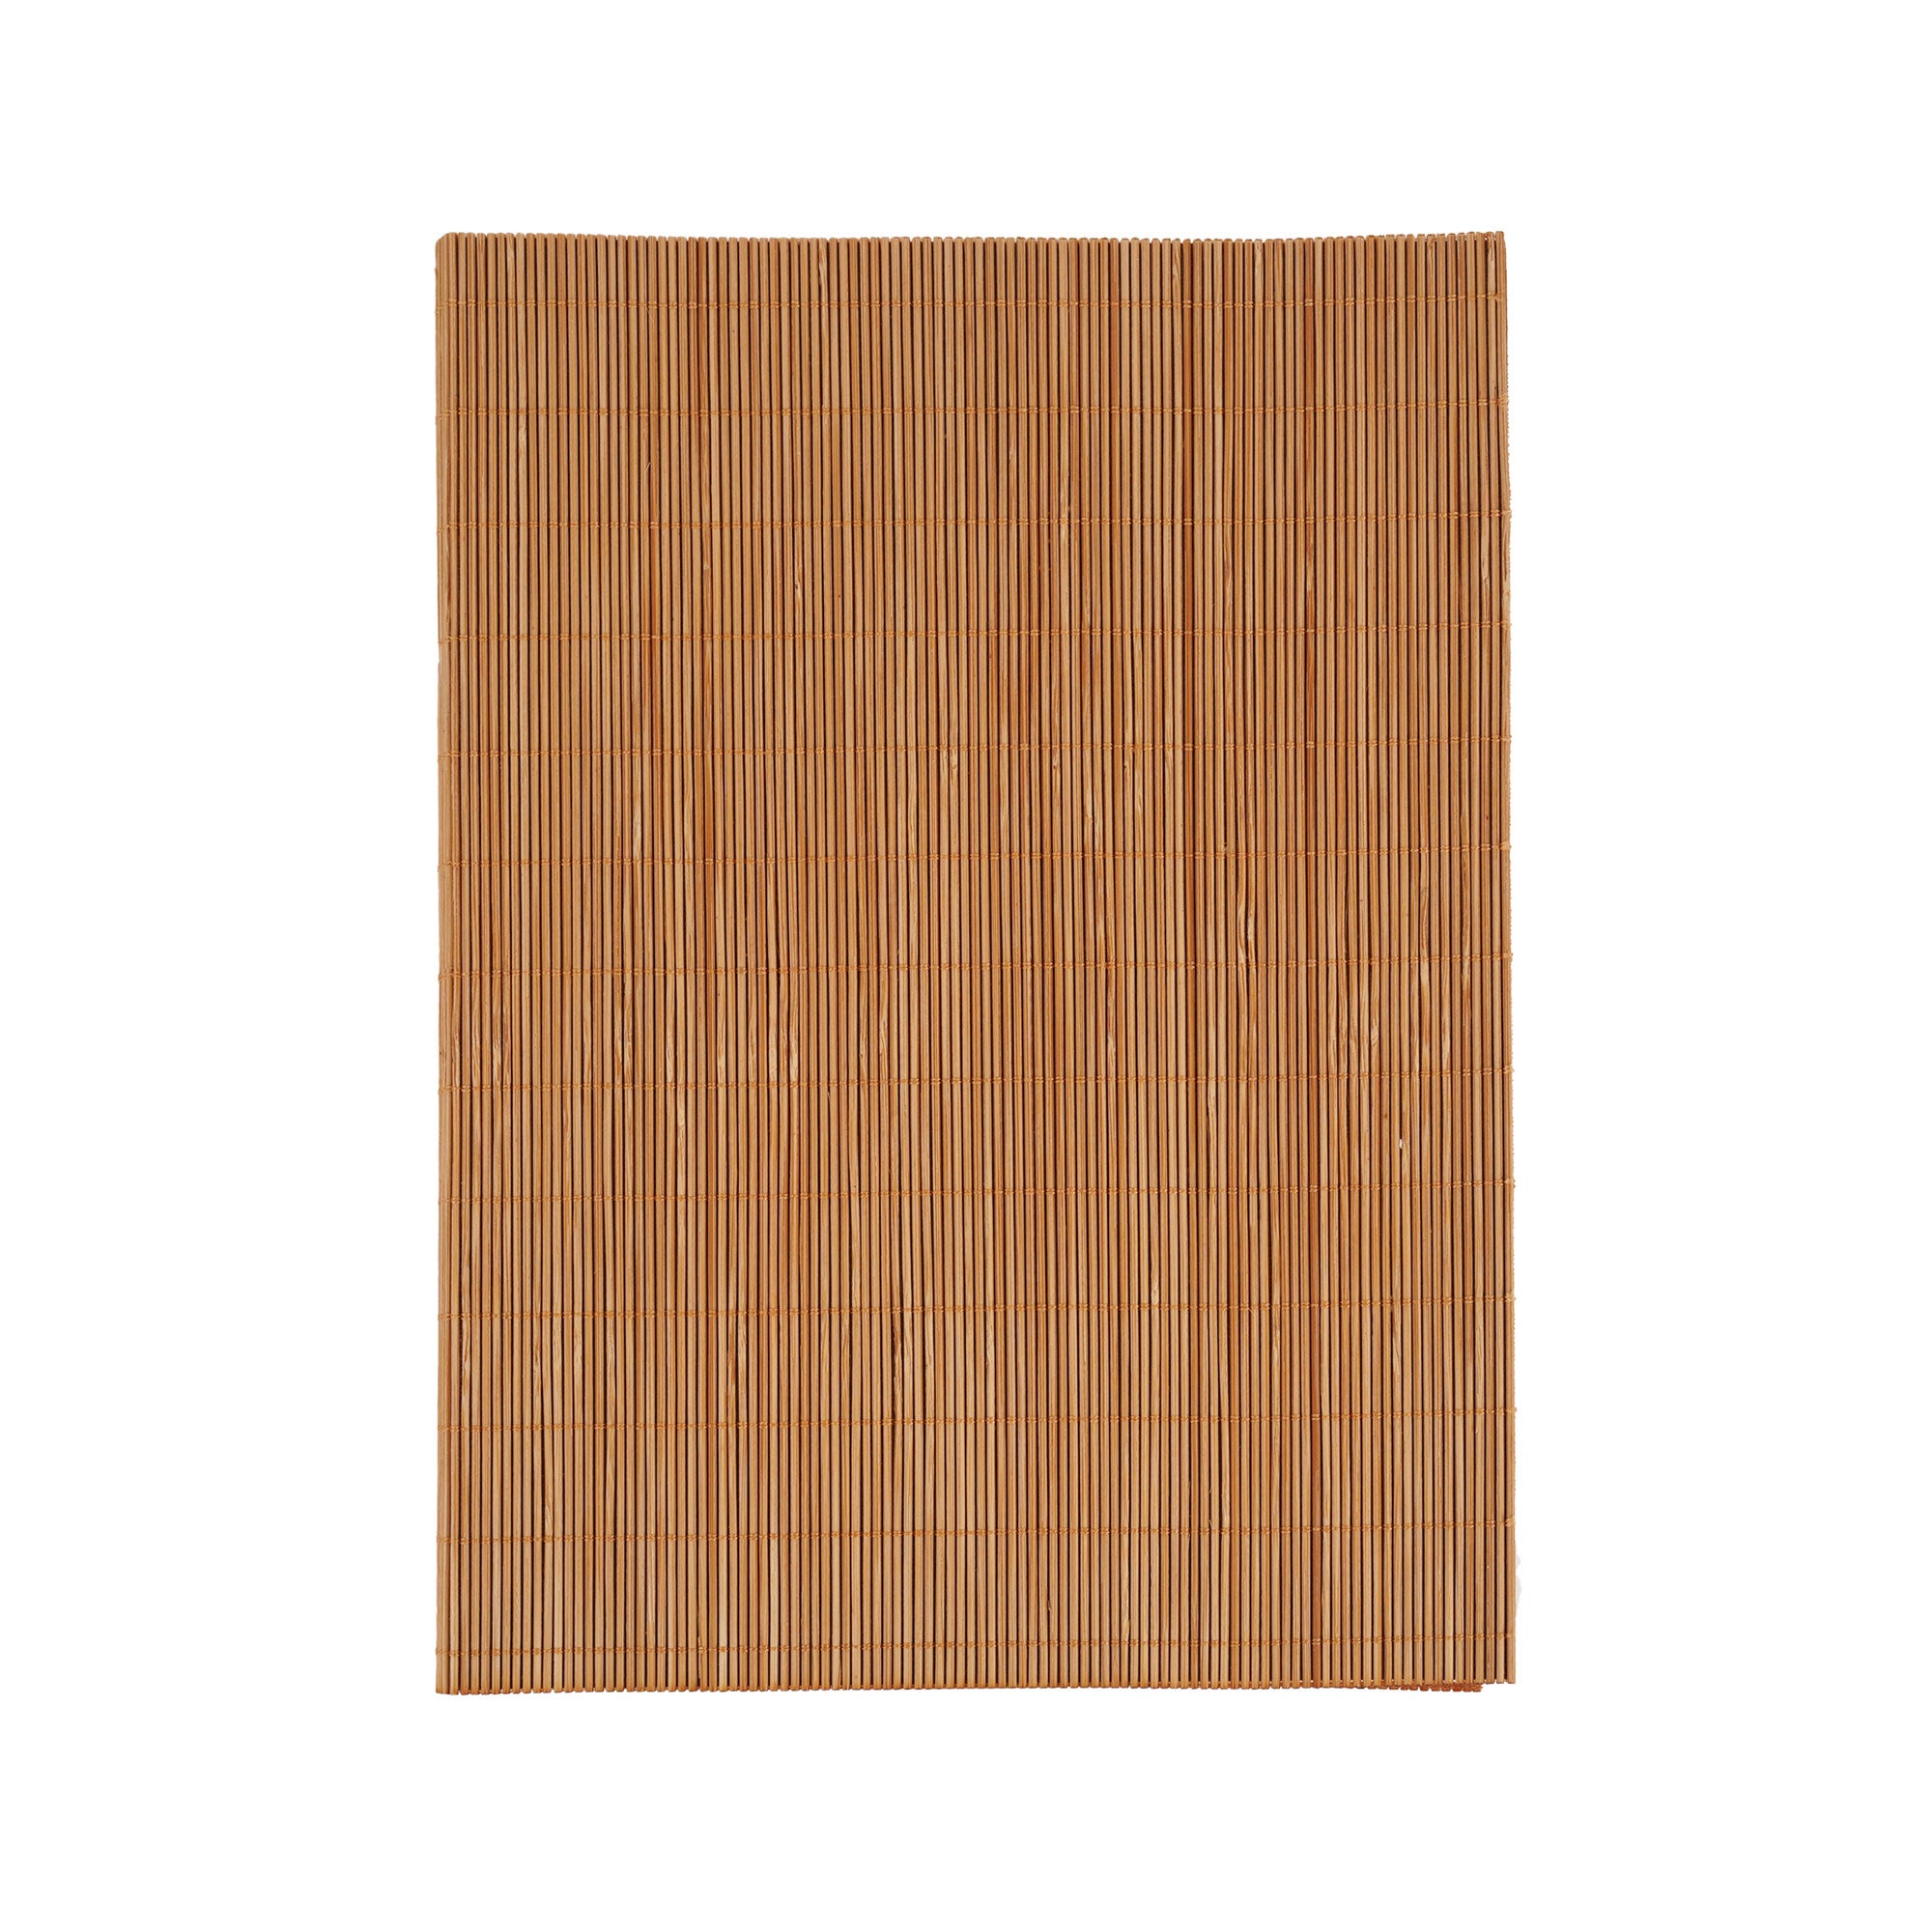 Bamboo Woven Notebook